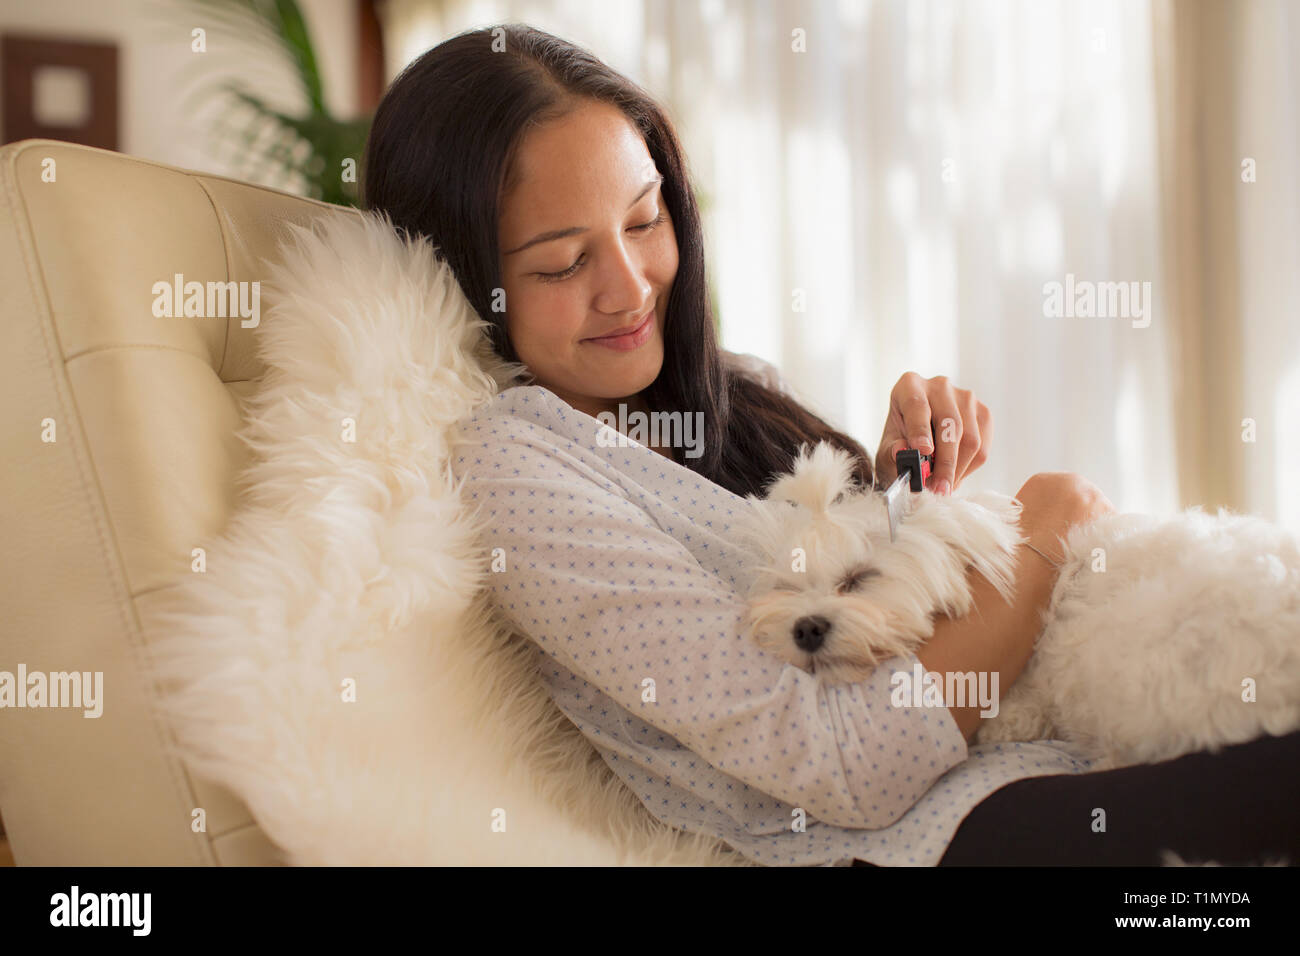 Smiling young woman brushing sleeping dog Stock Photo